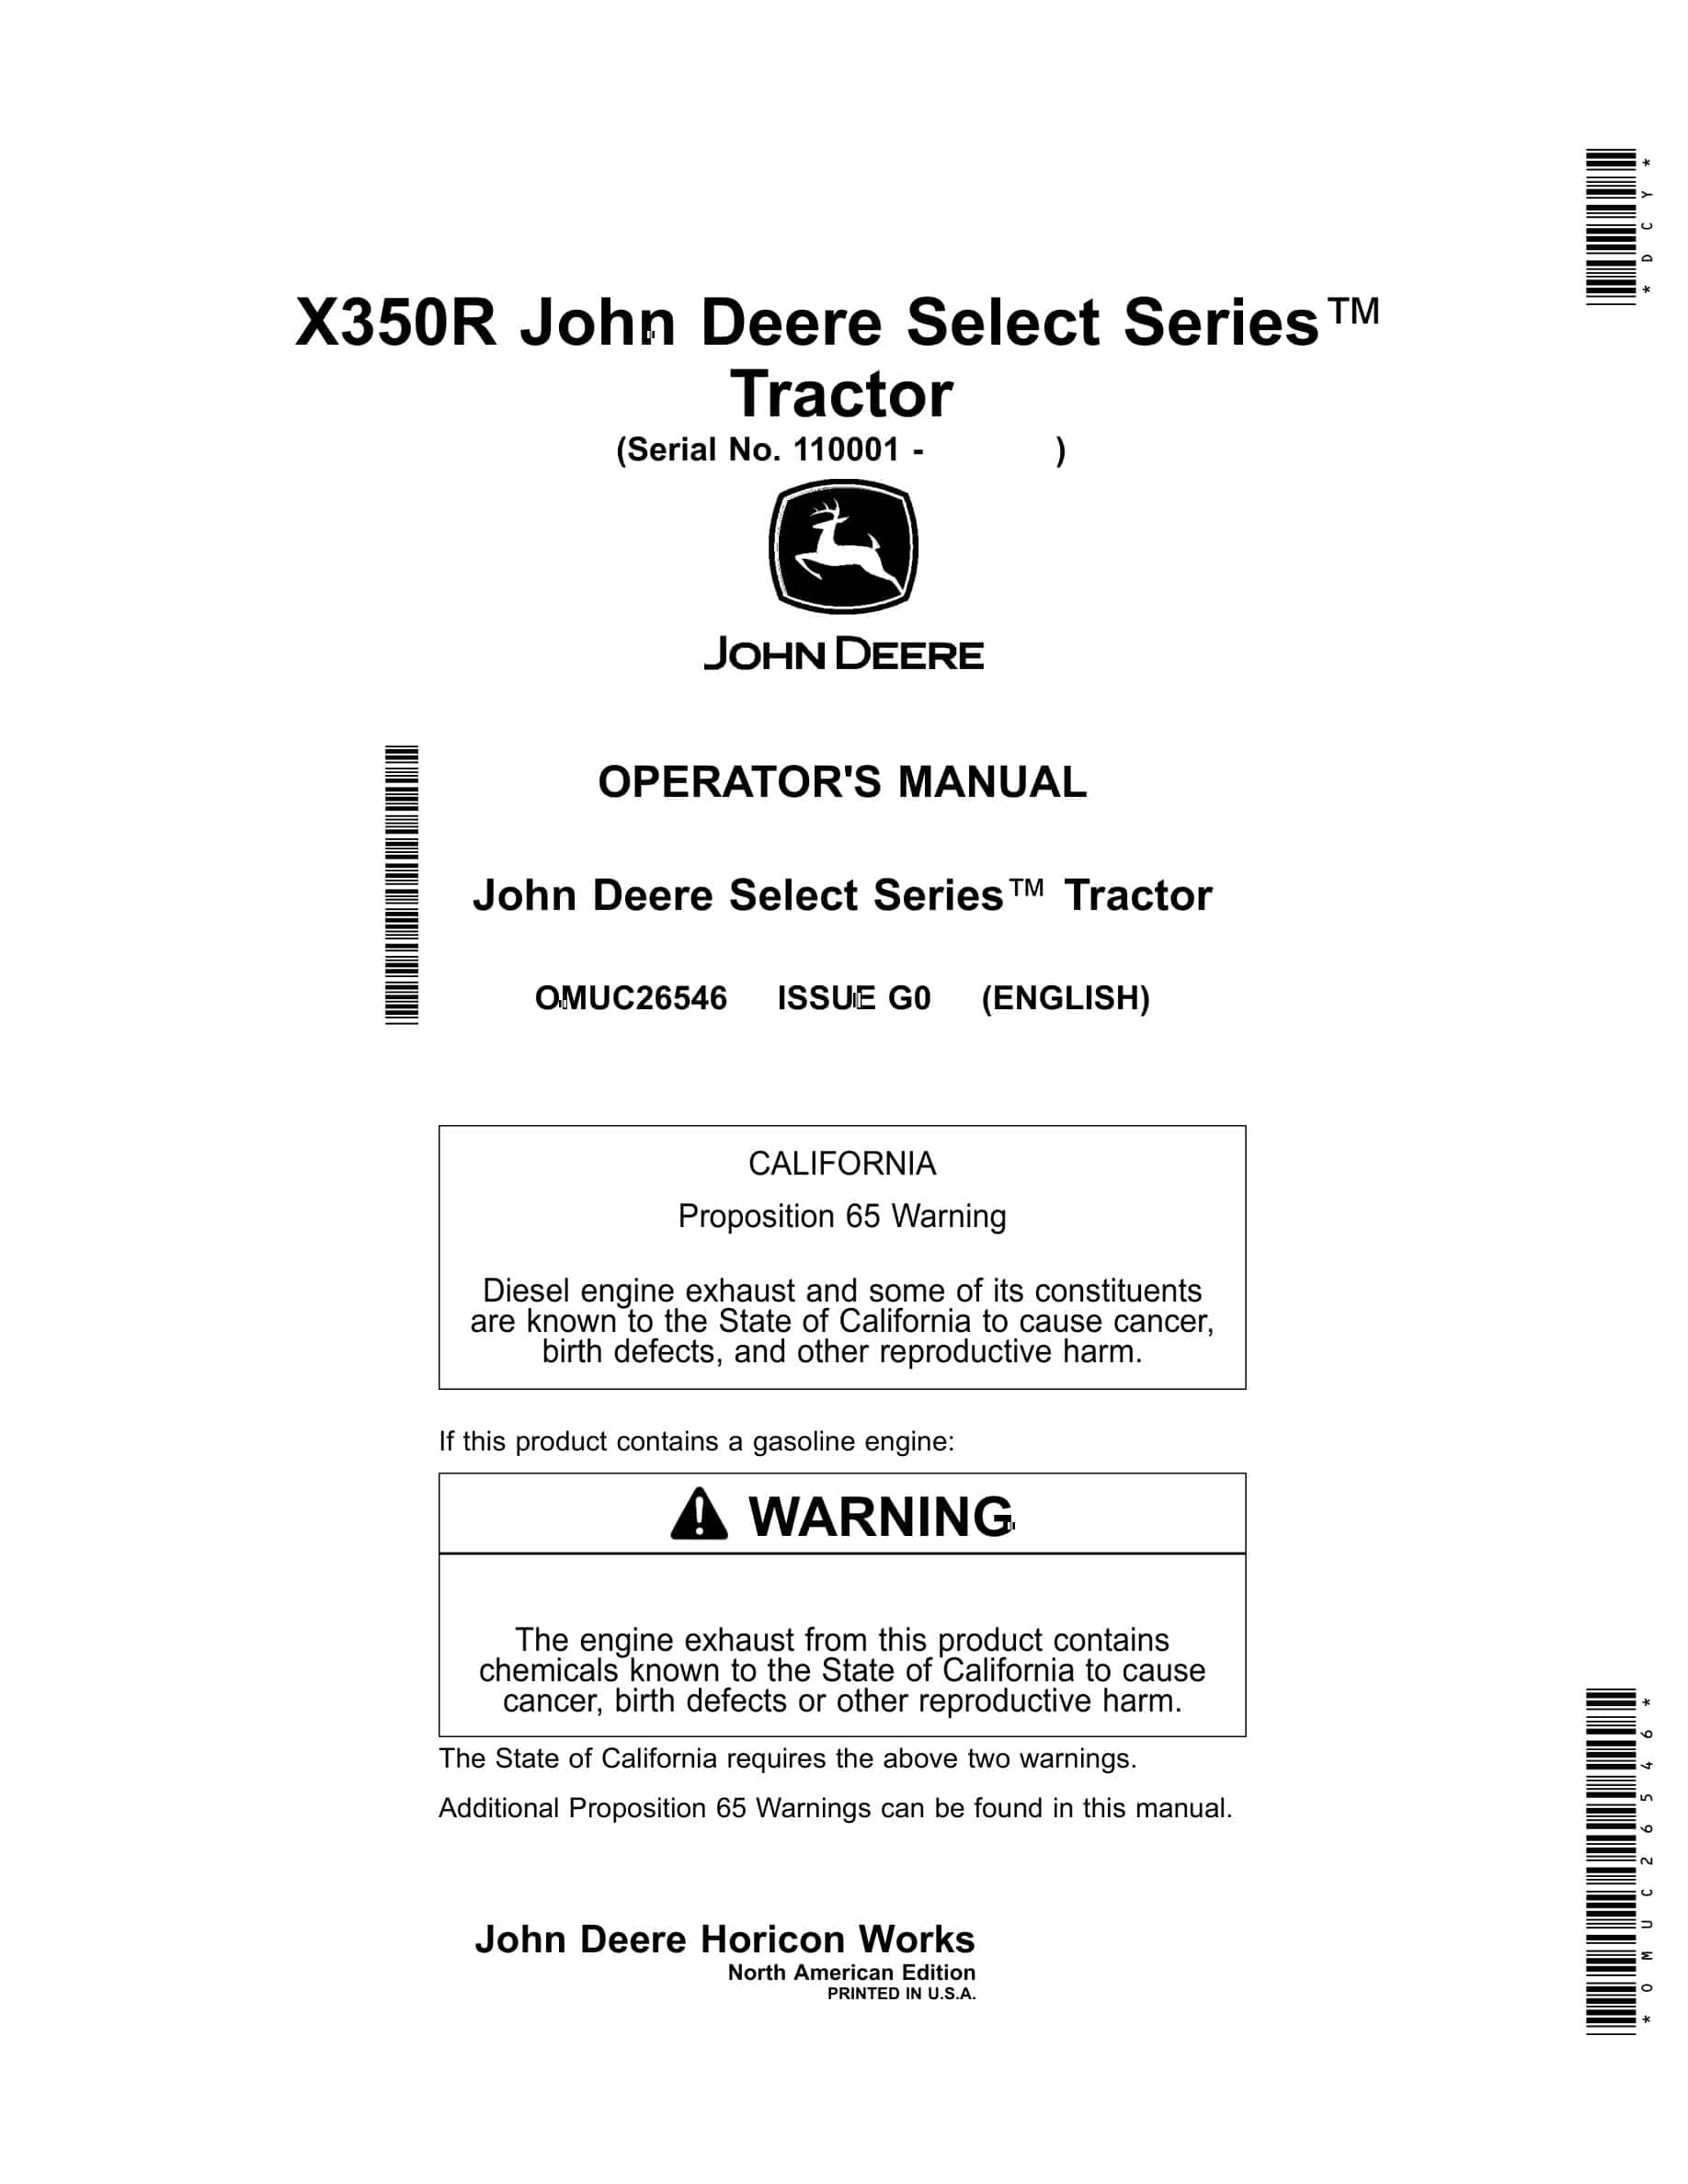 John Deere X350R Tractor Operator Manual OMUC26546-1